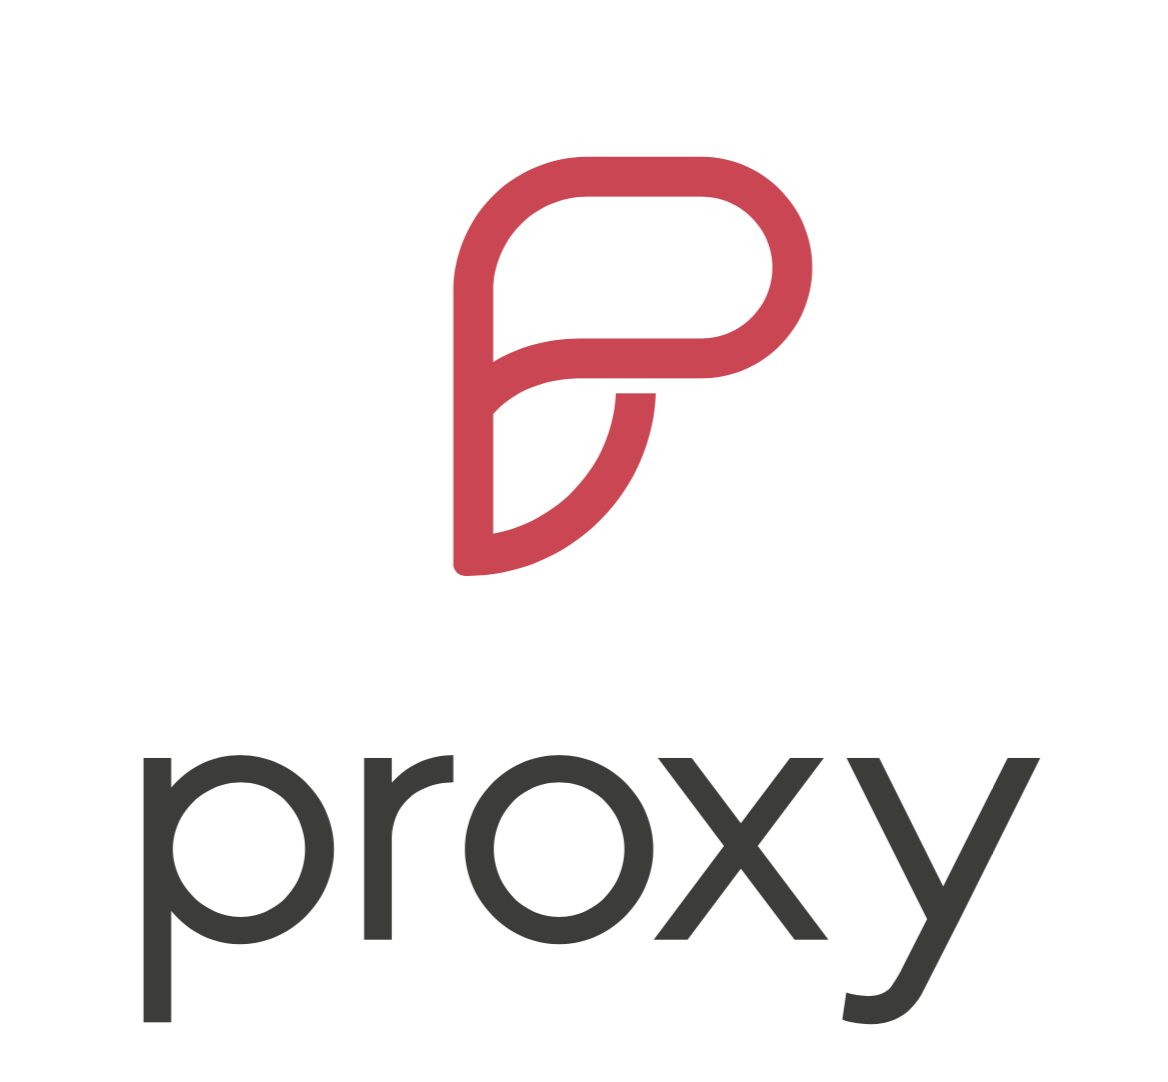 free proxy